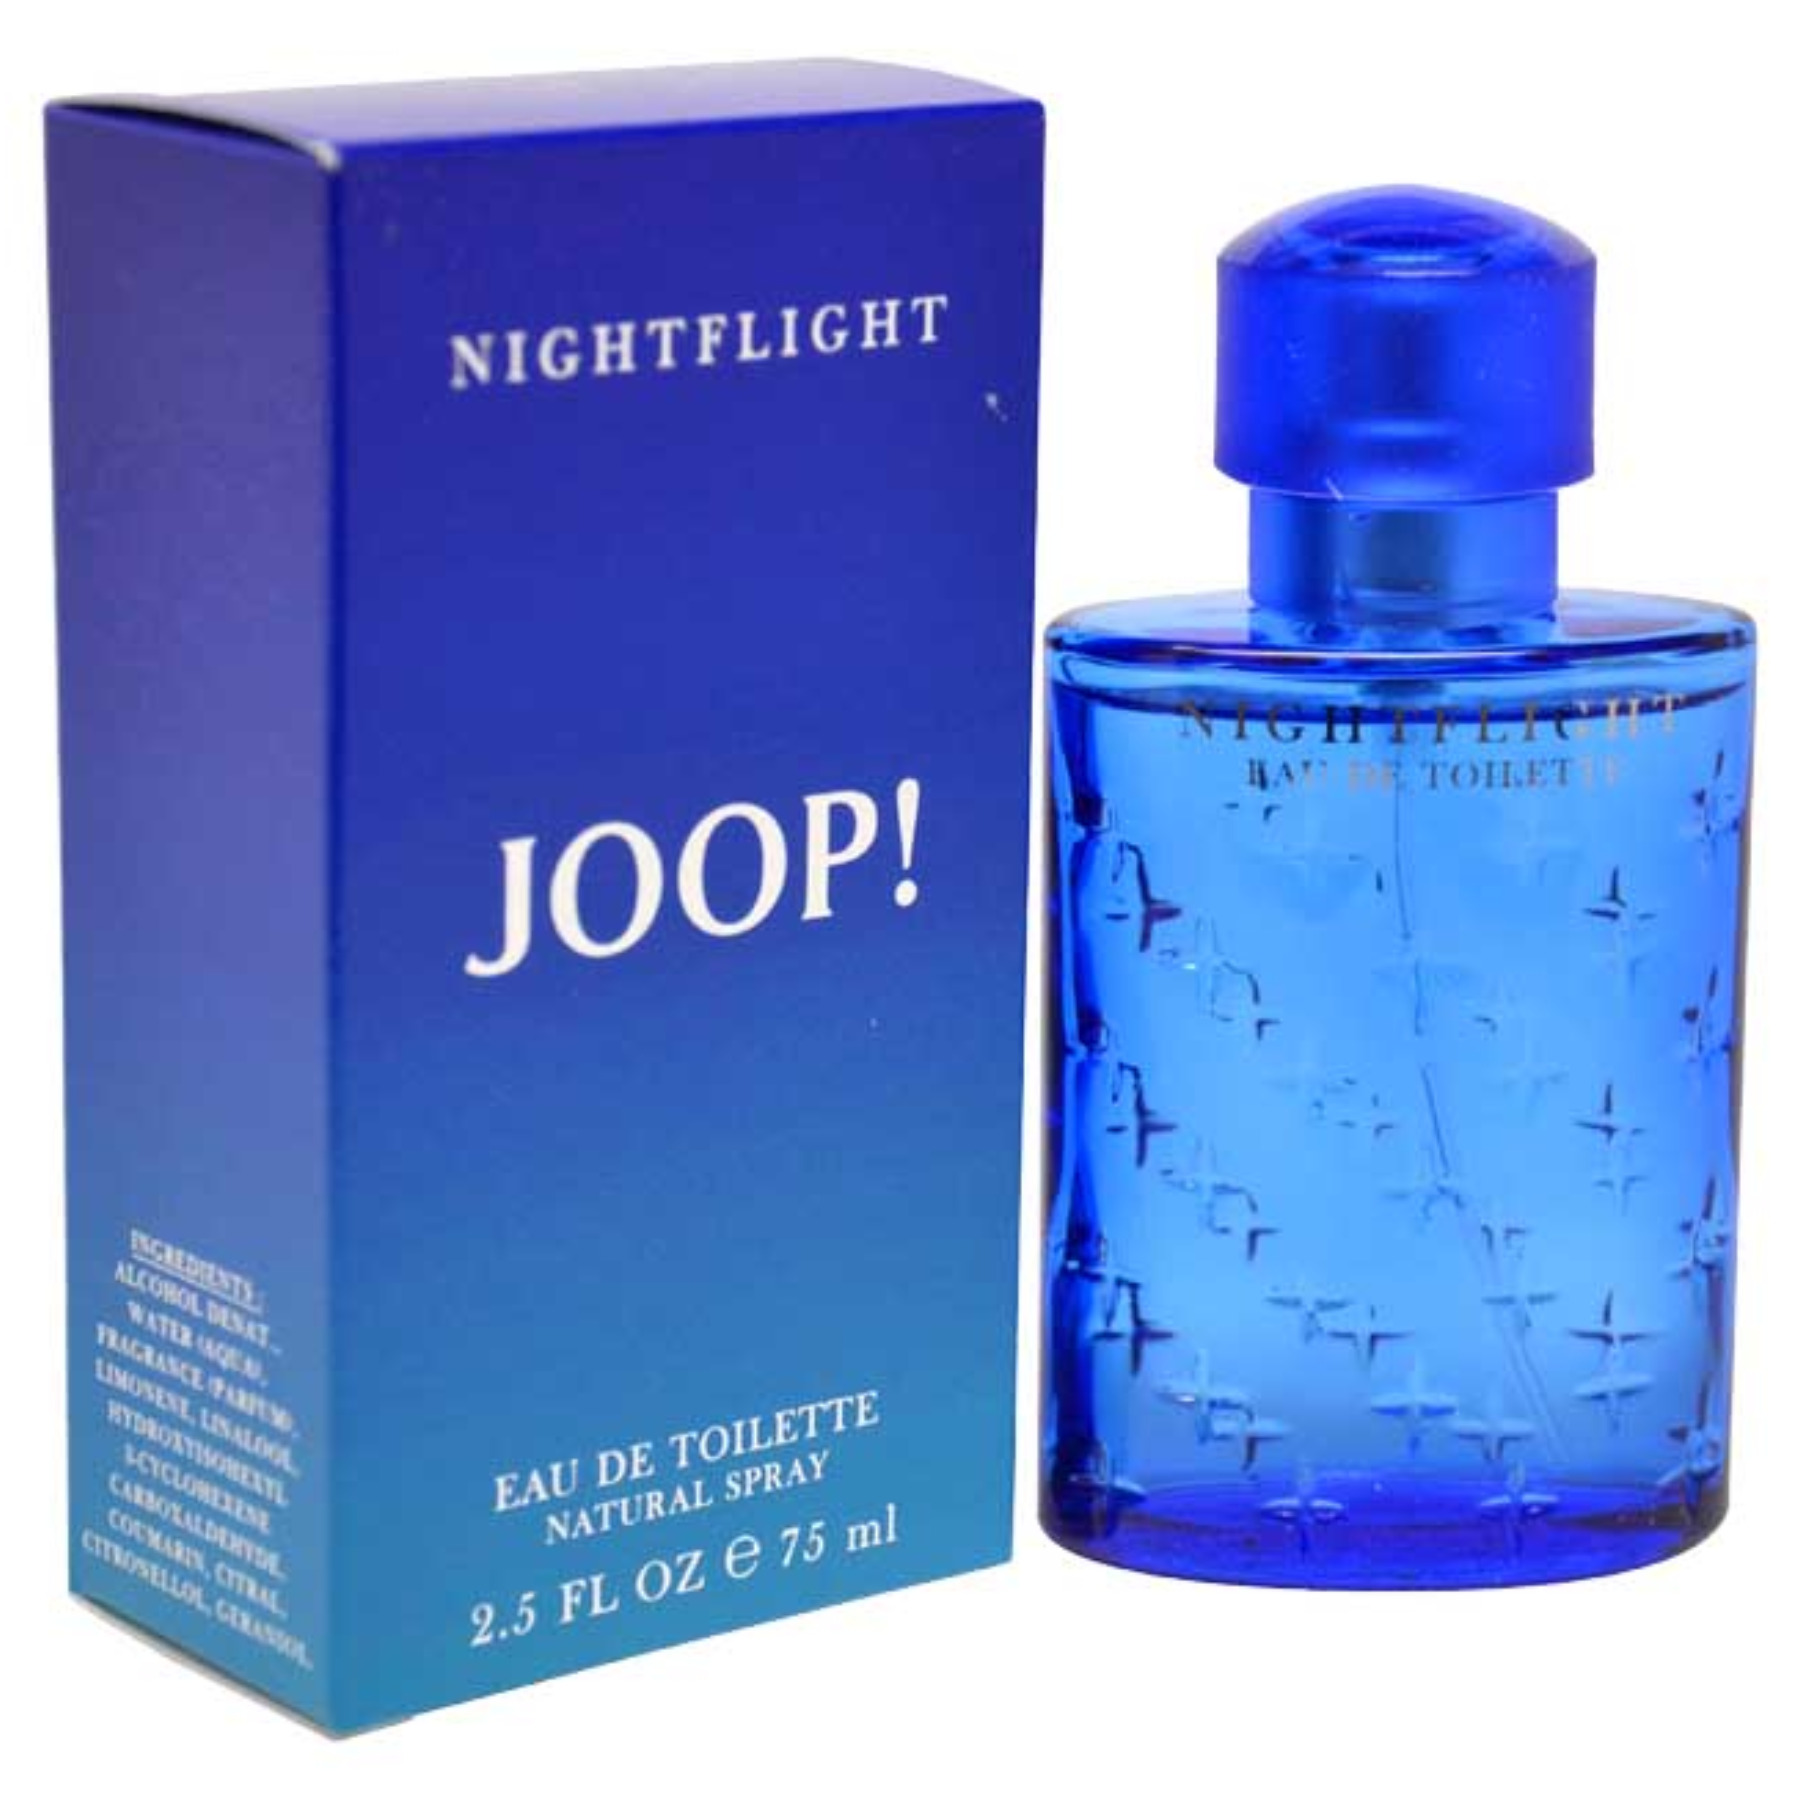 Joop Night Flight by Joop for Men Eau de Toilette Spray 2.5 oz